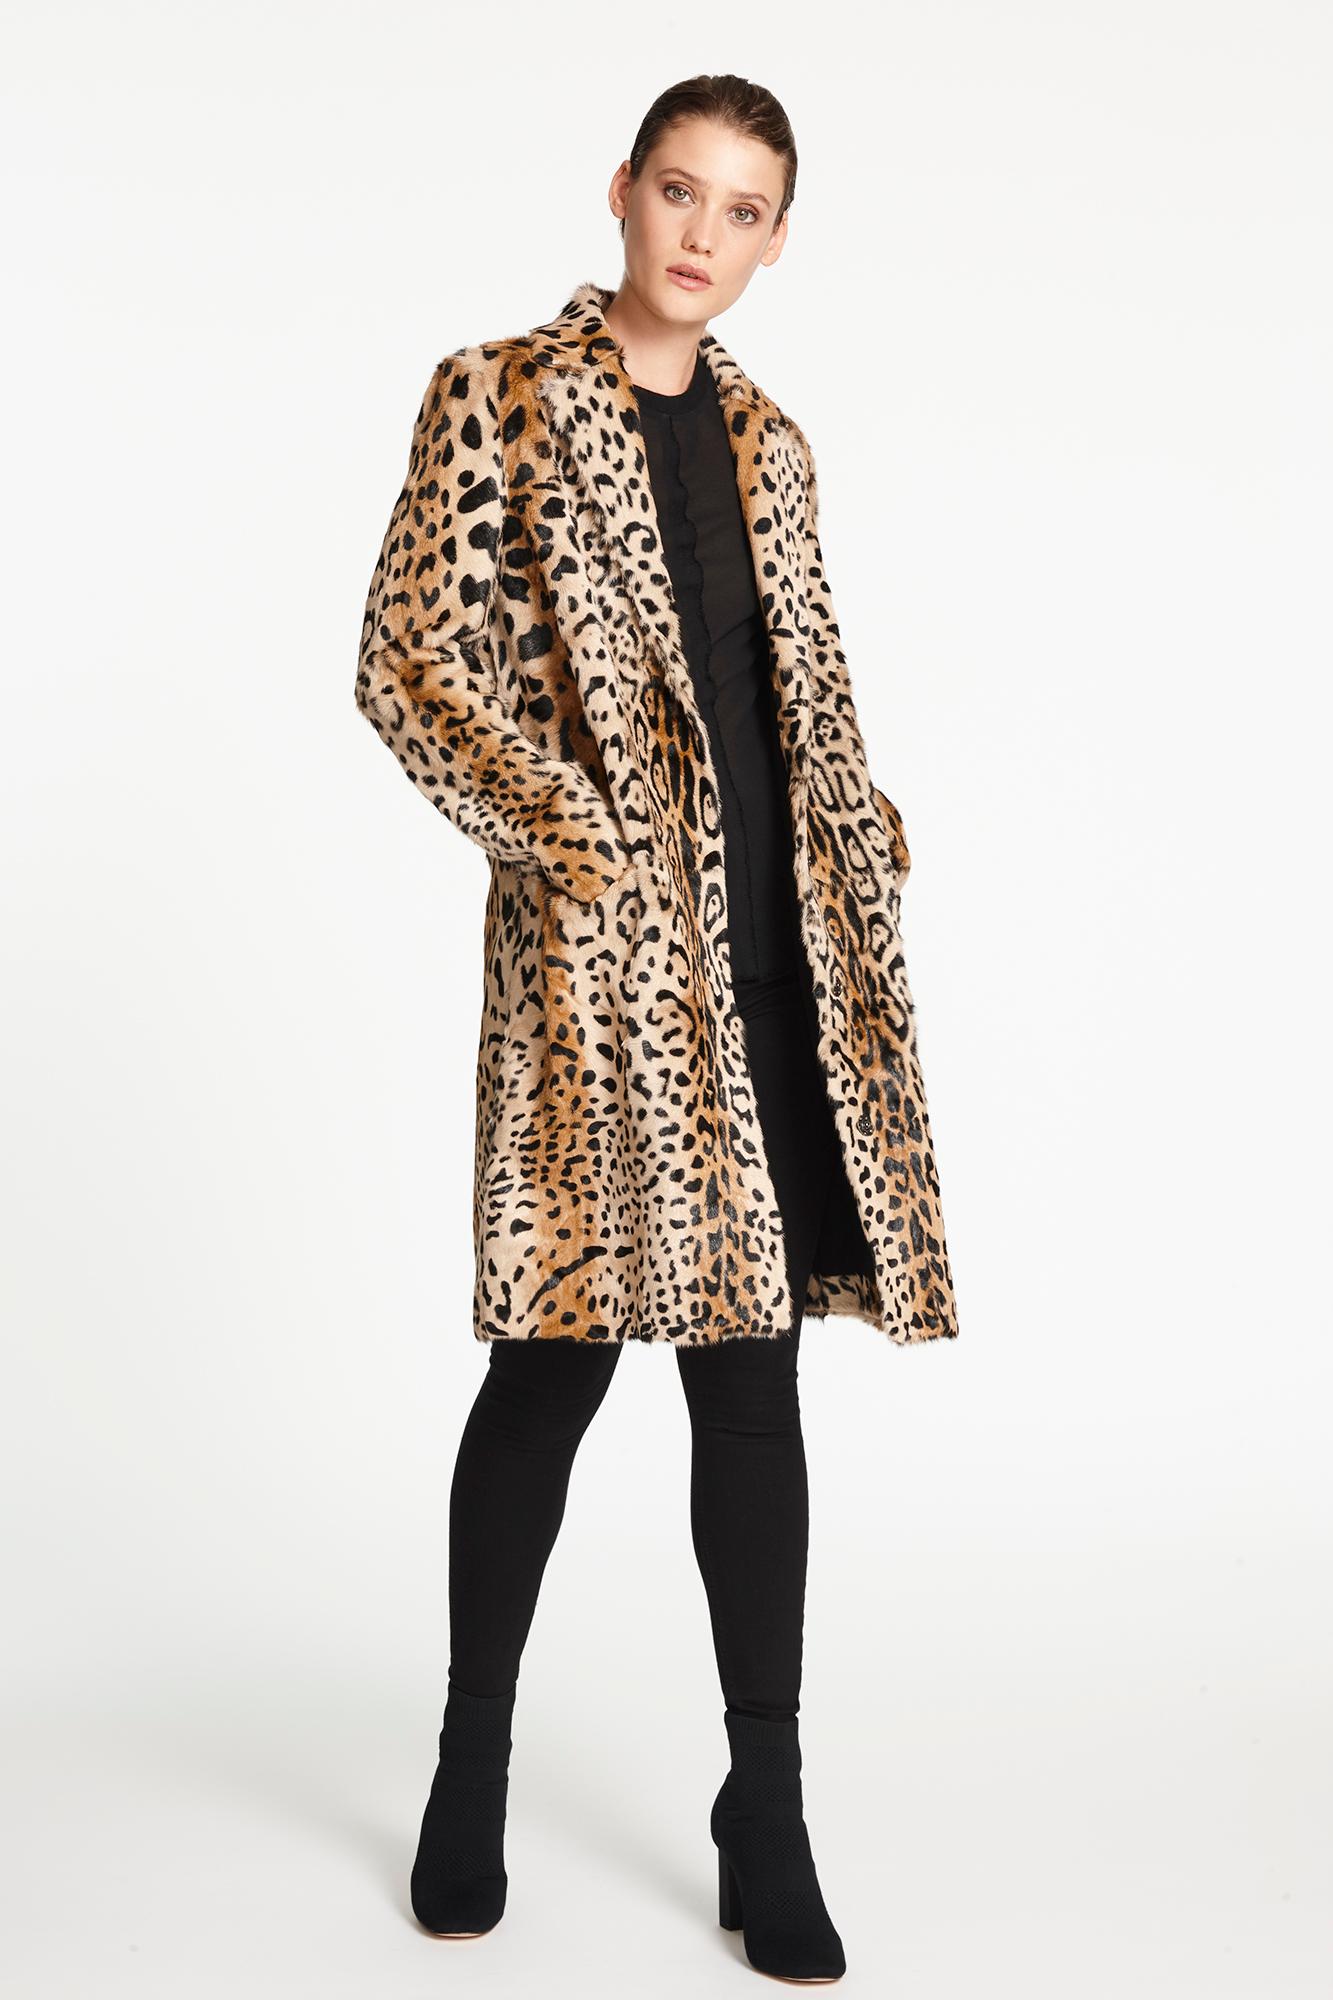 Verheyen London Leopard Print Coat in Red Ruby Goat Hair Fur UK 12 - Brand New  4